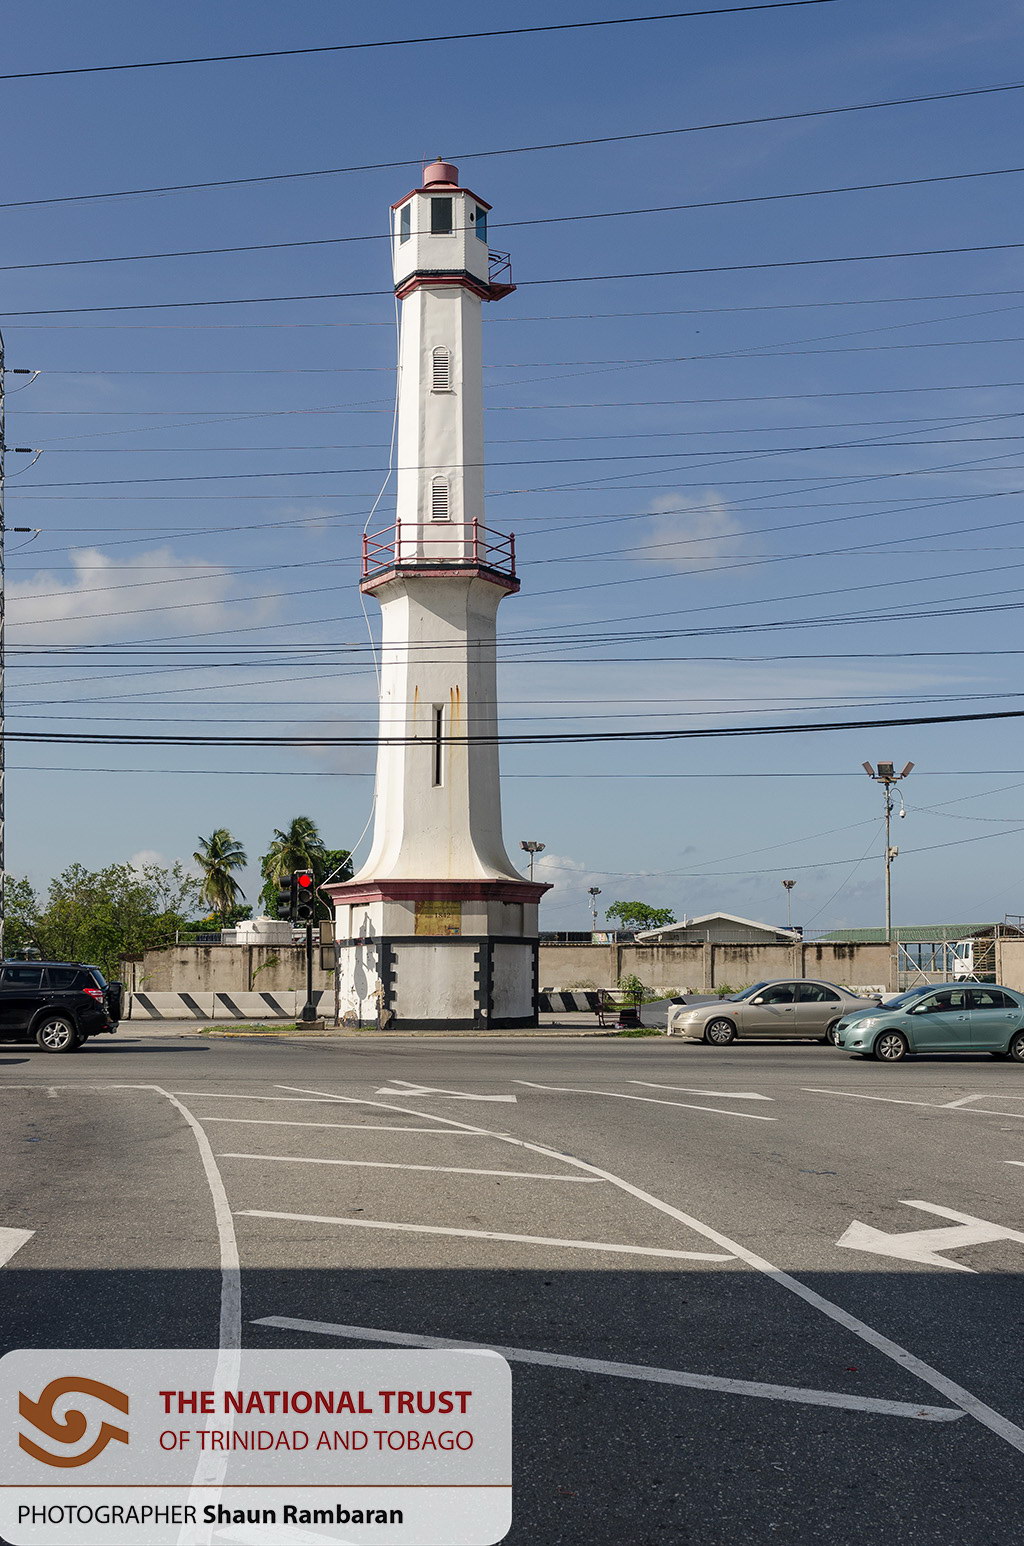 The Saint Vincent Jetty Lighthouse